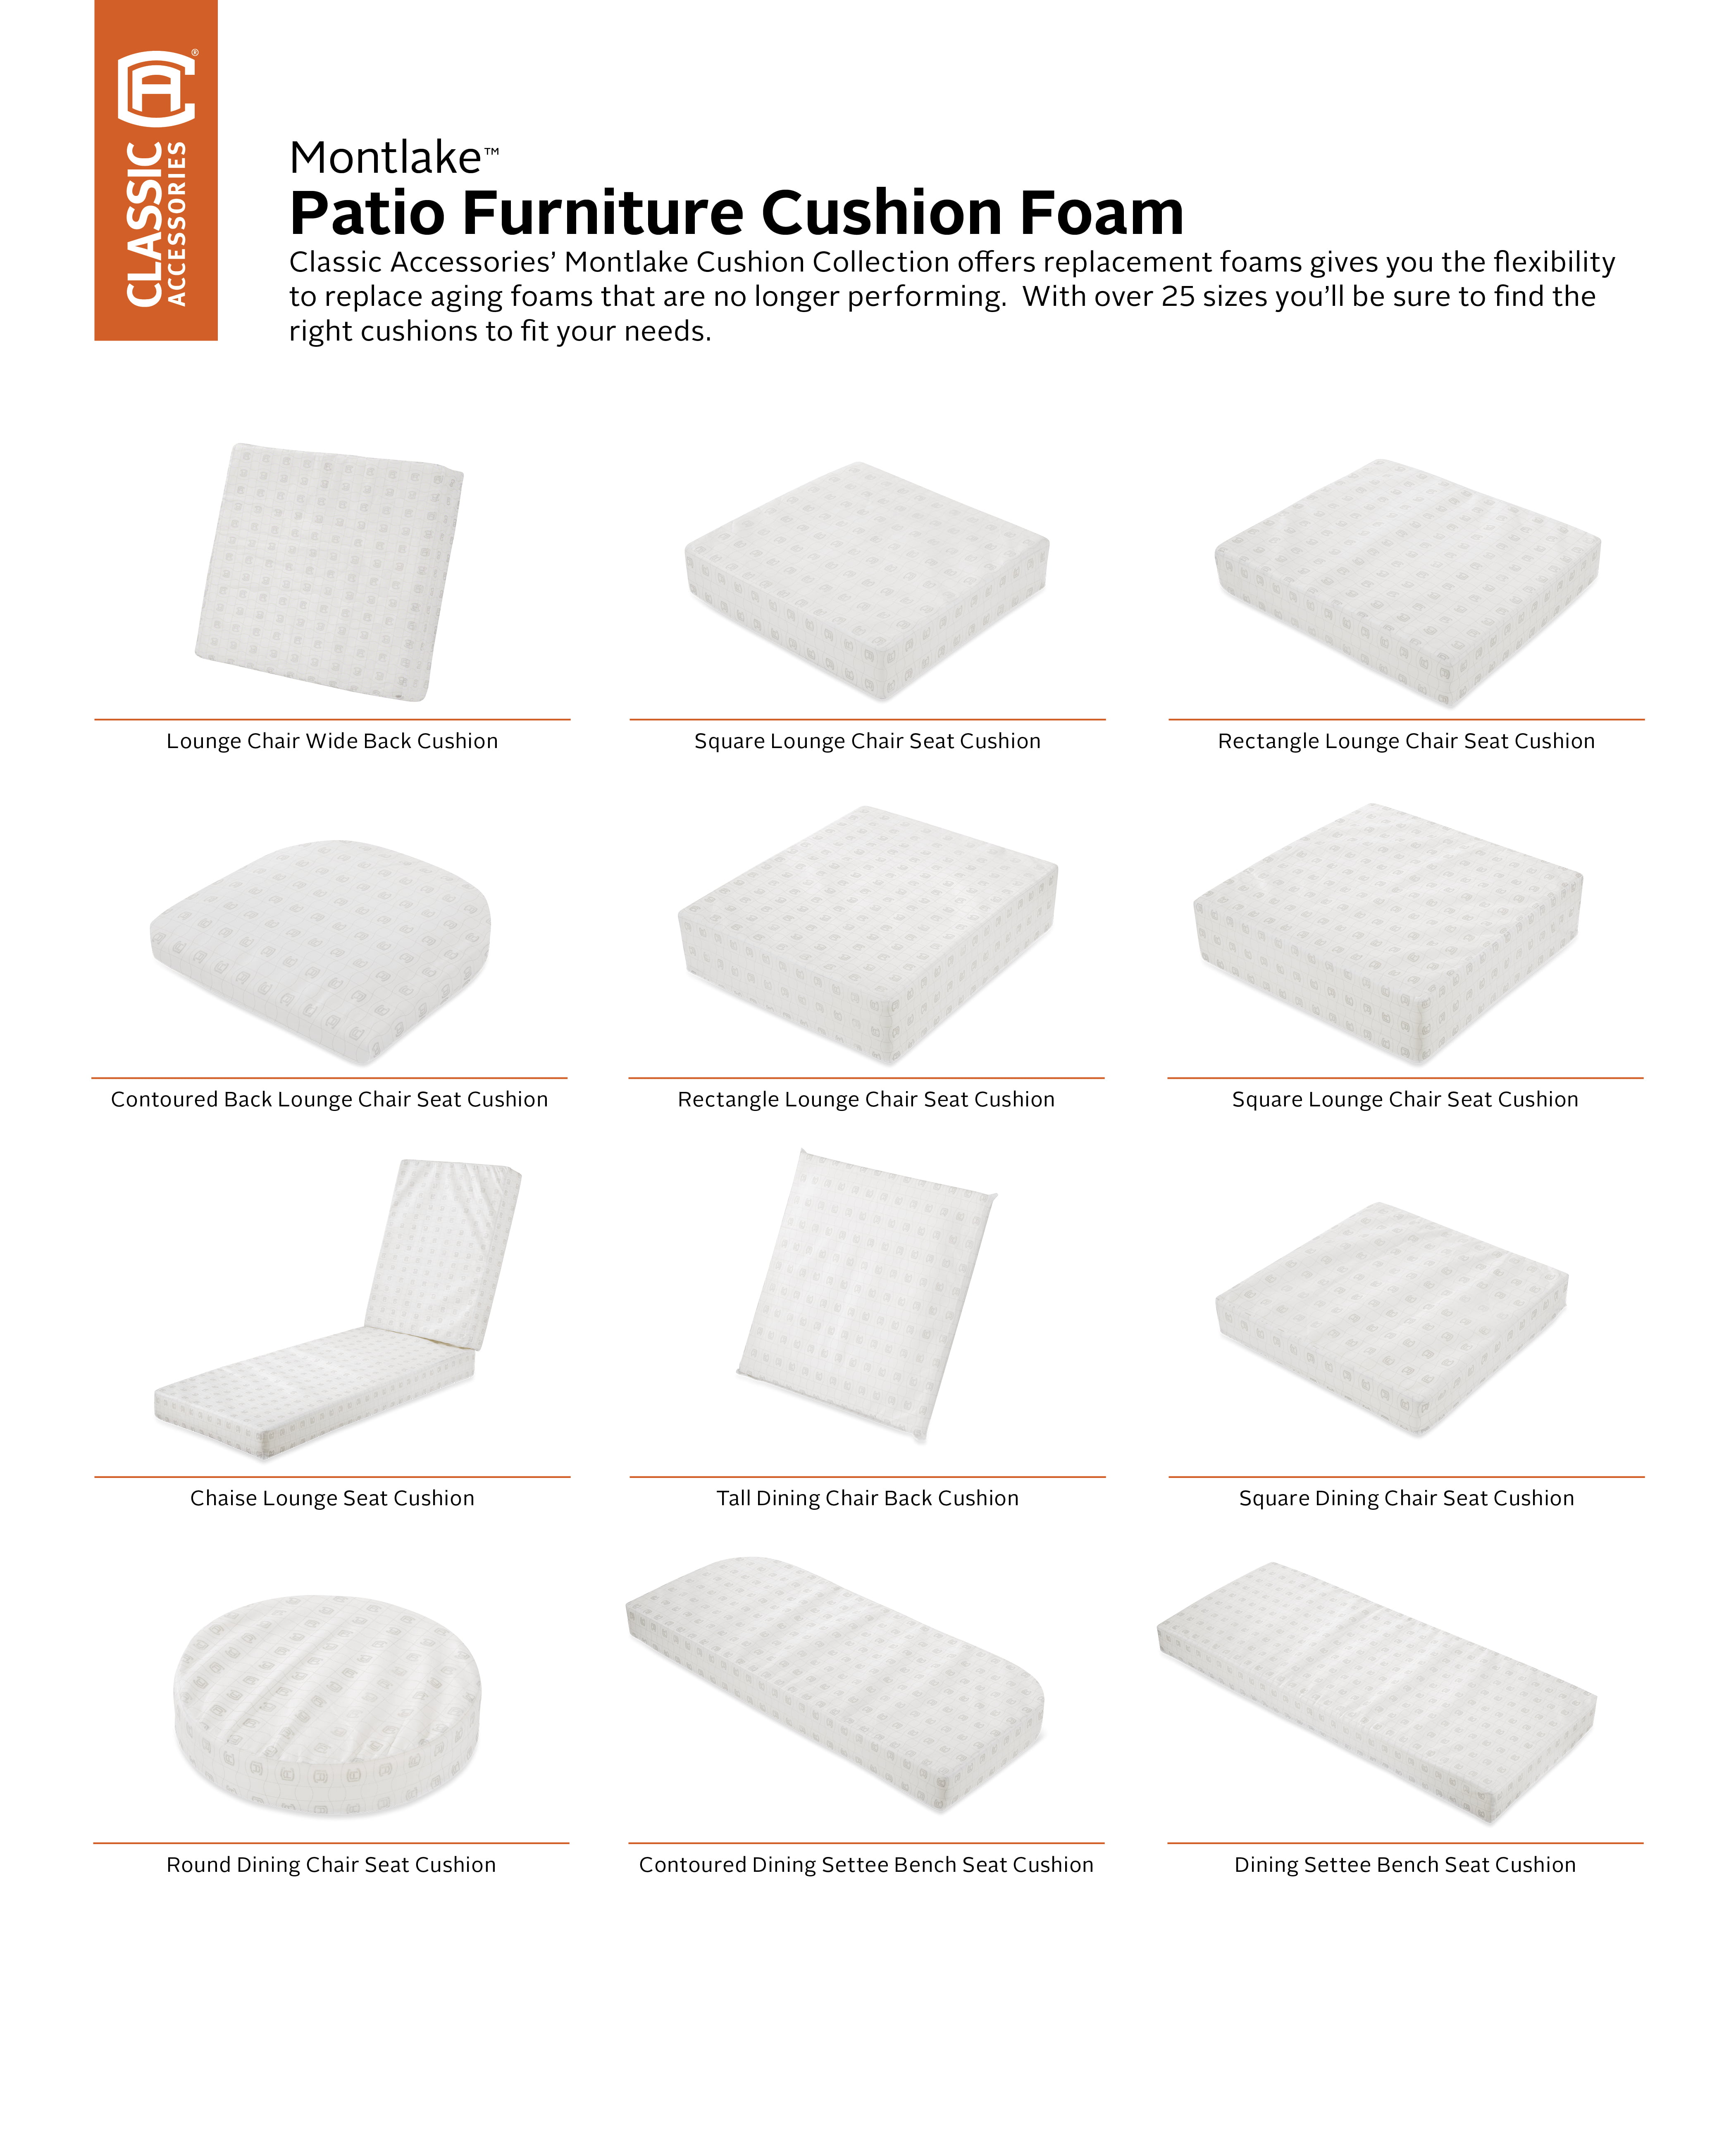 Classic Accessories 25 x 20 x 4 inch Patio Lounge Back Cushion Foam